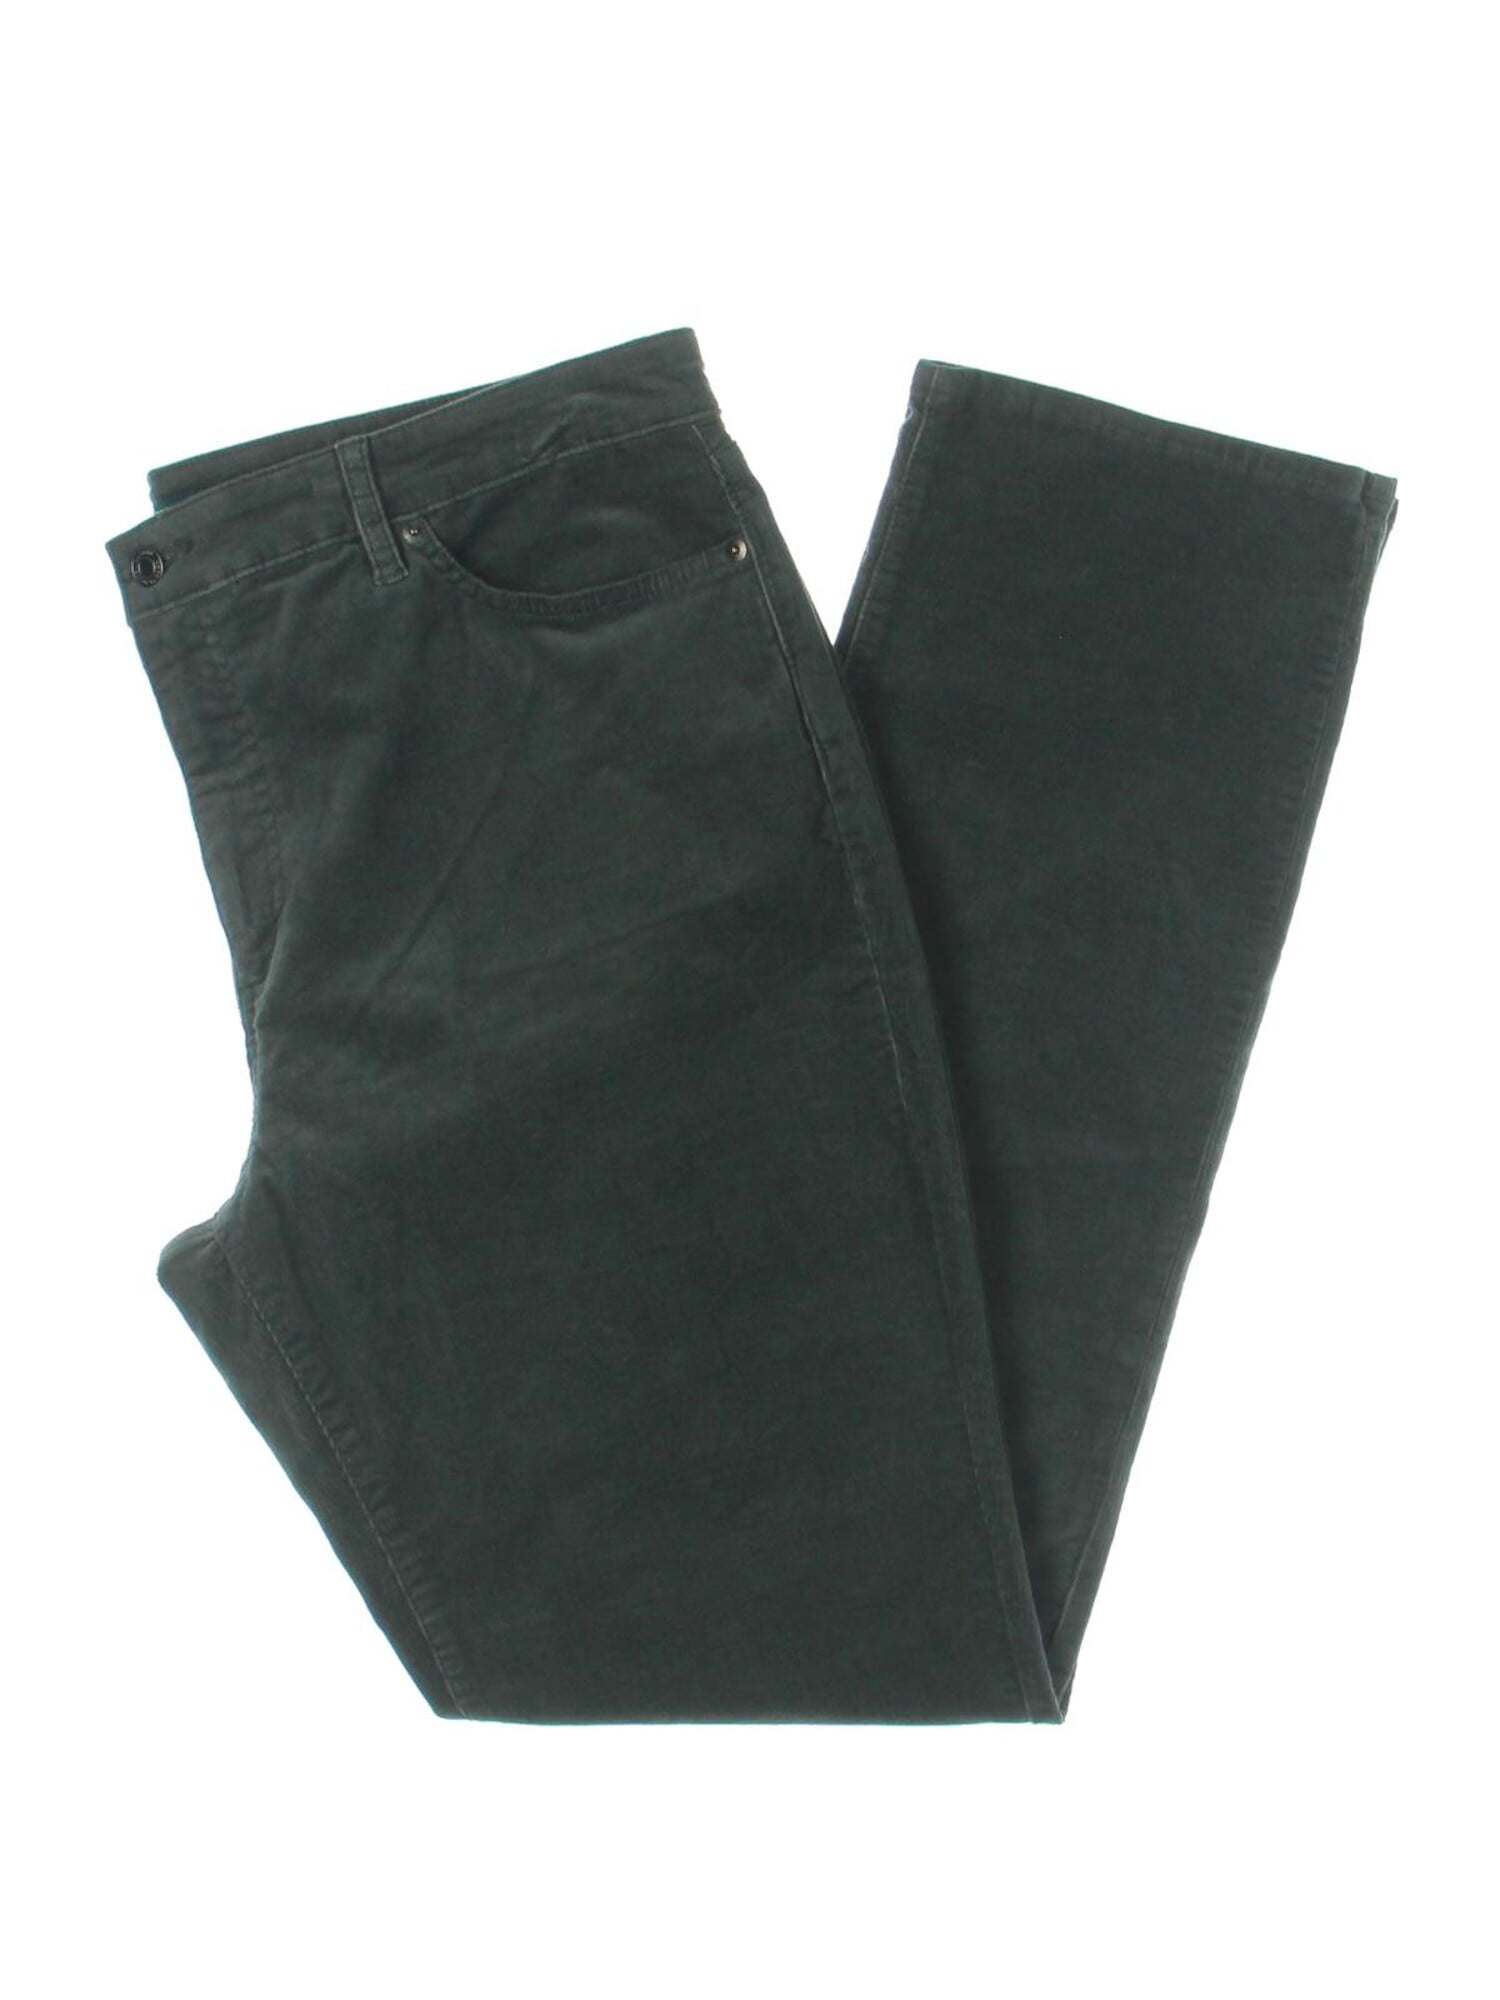 RALPH LAUREN Womens Gray Pants Size: 8 - Walmart.com